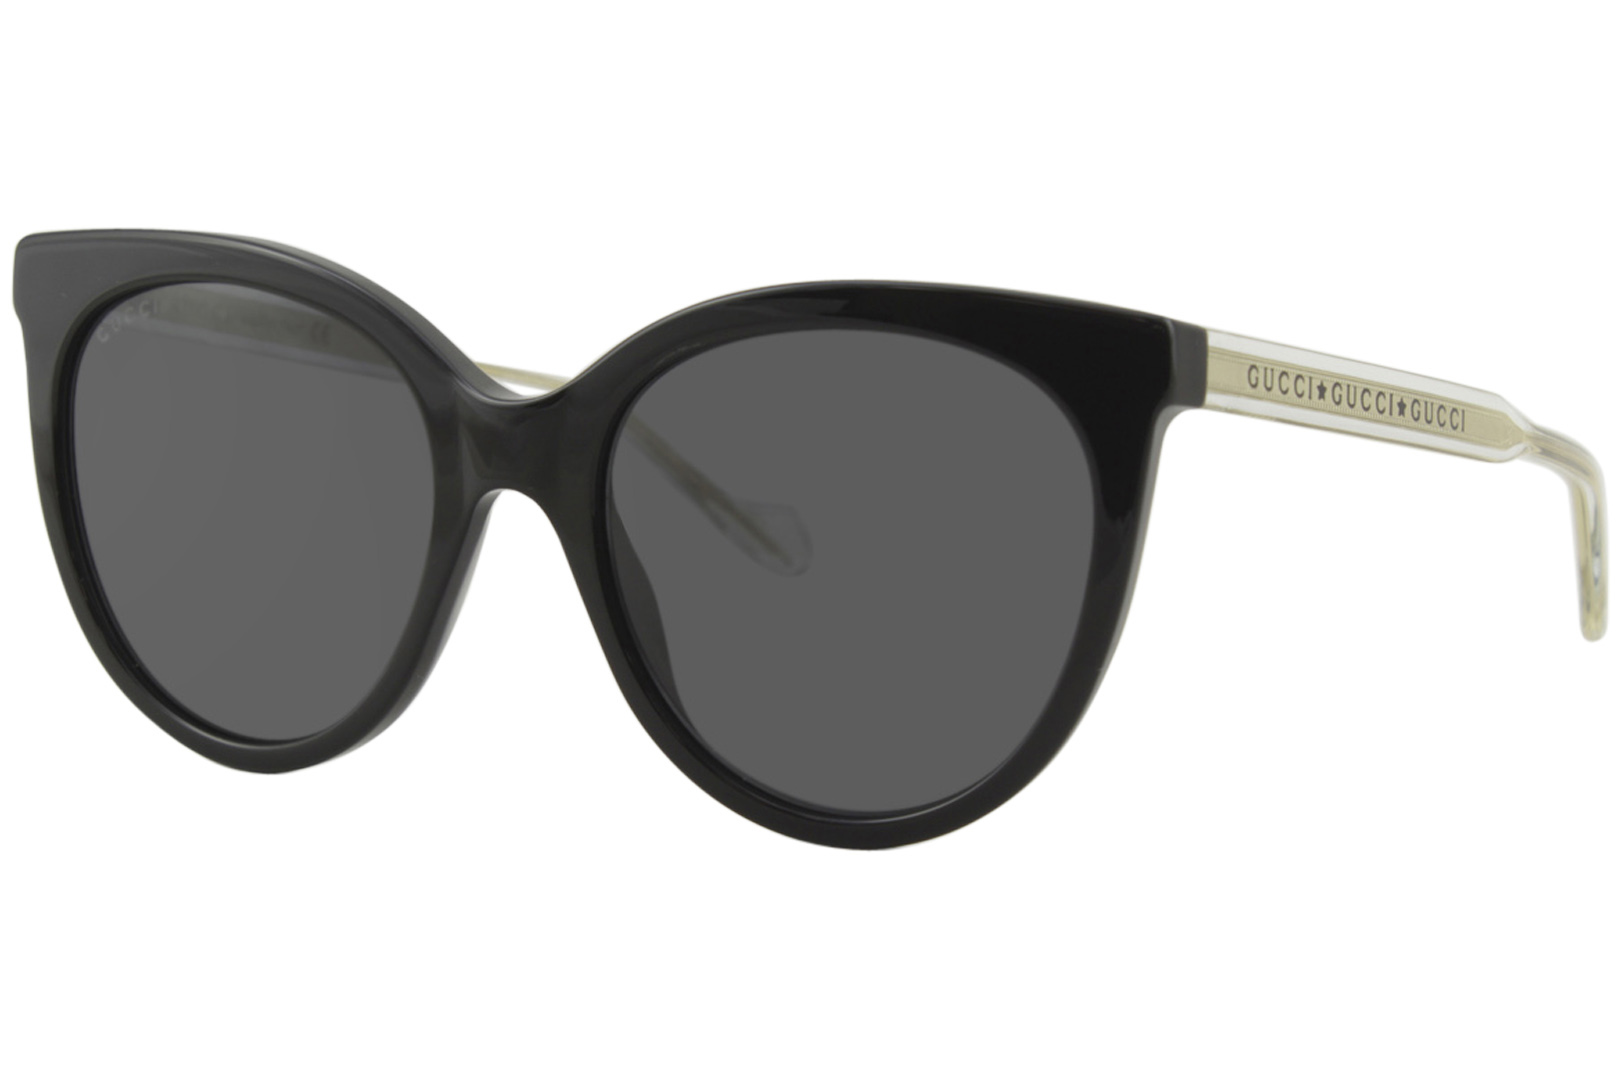 Gucci GG0565S Sunglasses Women's Fashion Cat Eye Shades | EyeSpecs.com